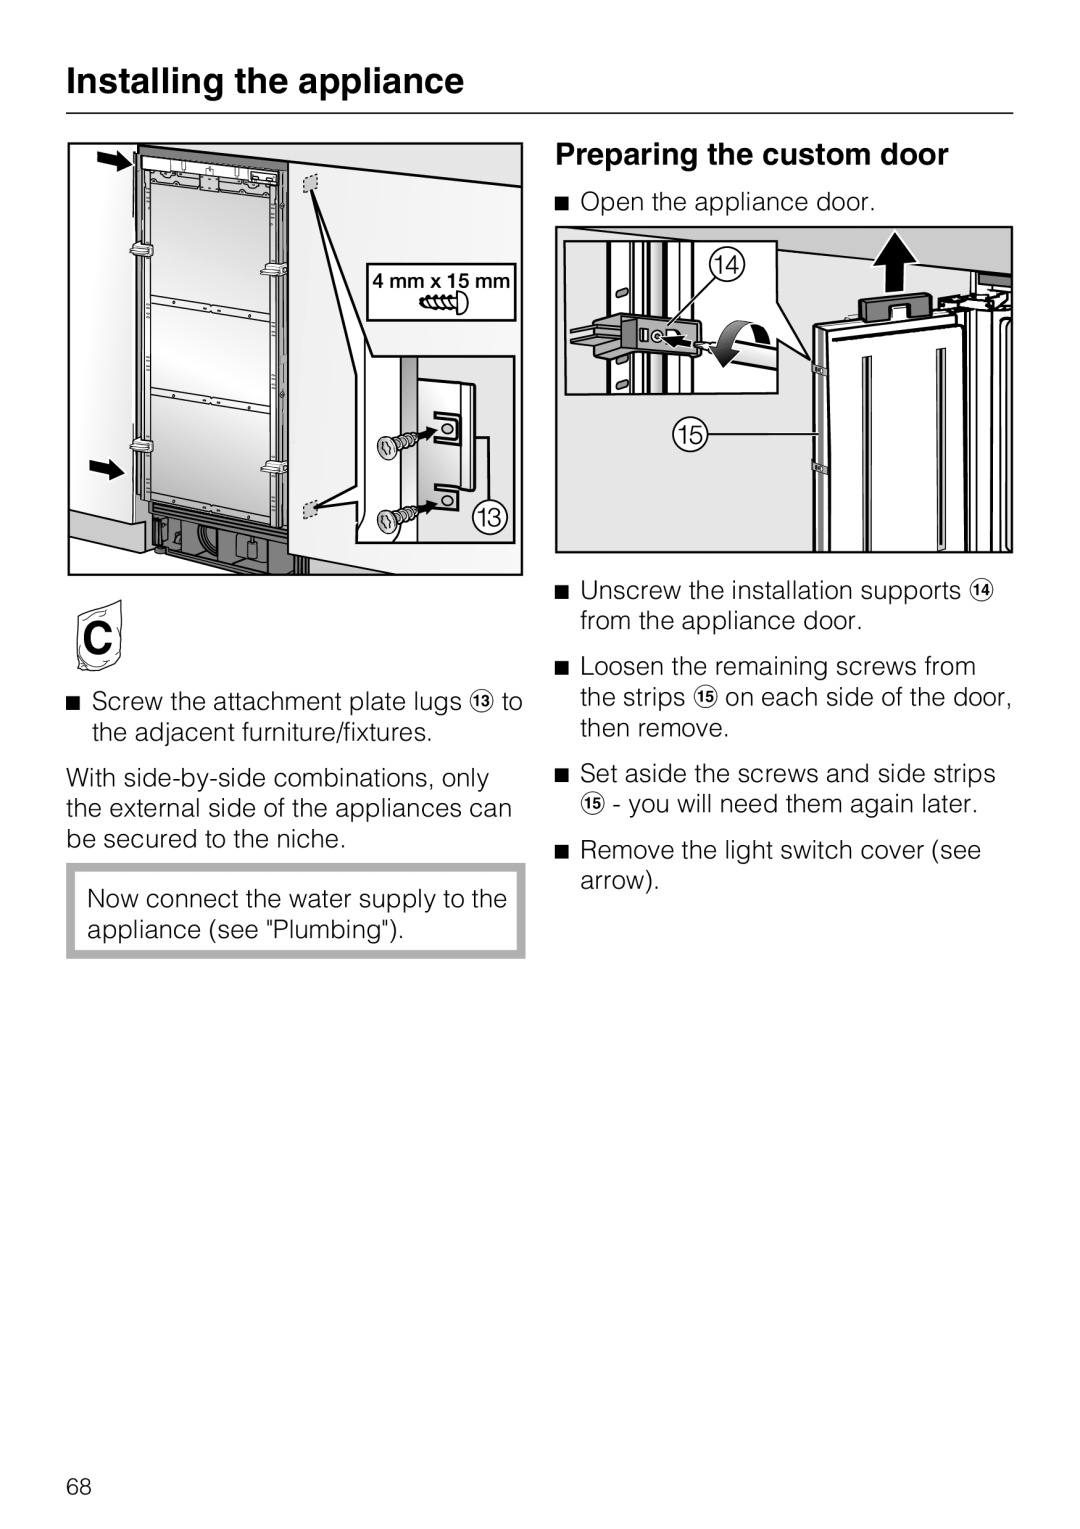 Miele F1471VI installation instructions Preparing the custom door, Installing the appliance 